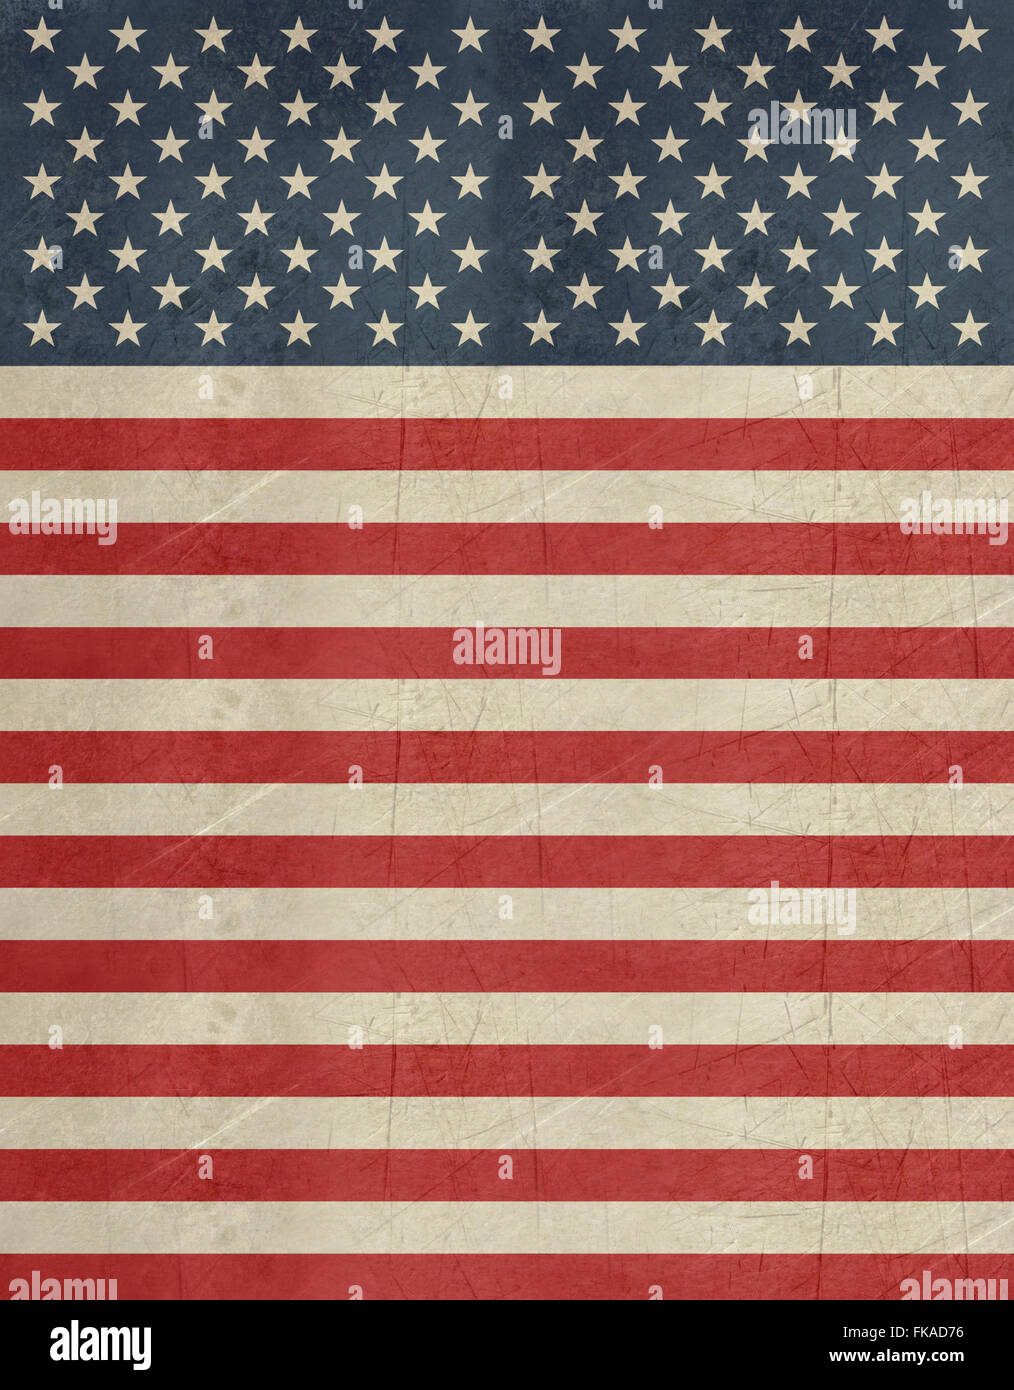 Grunge American flag banner colgado verticalmente. Foto de stock